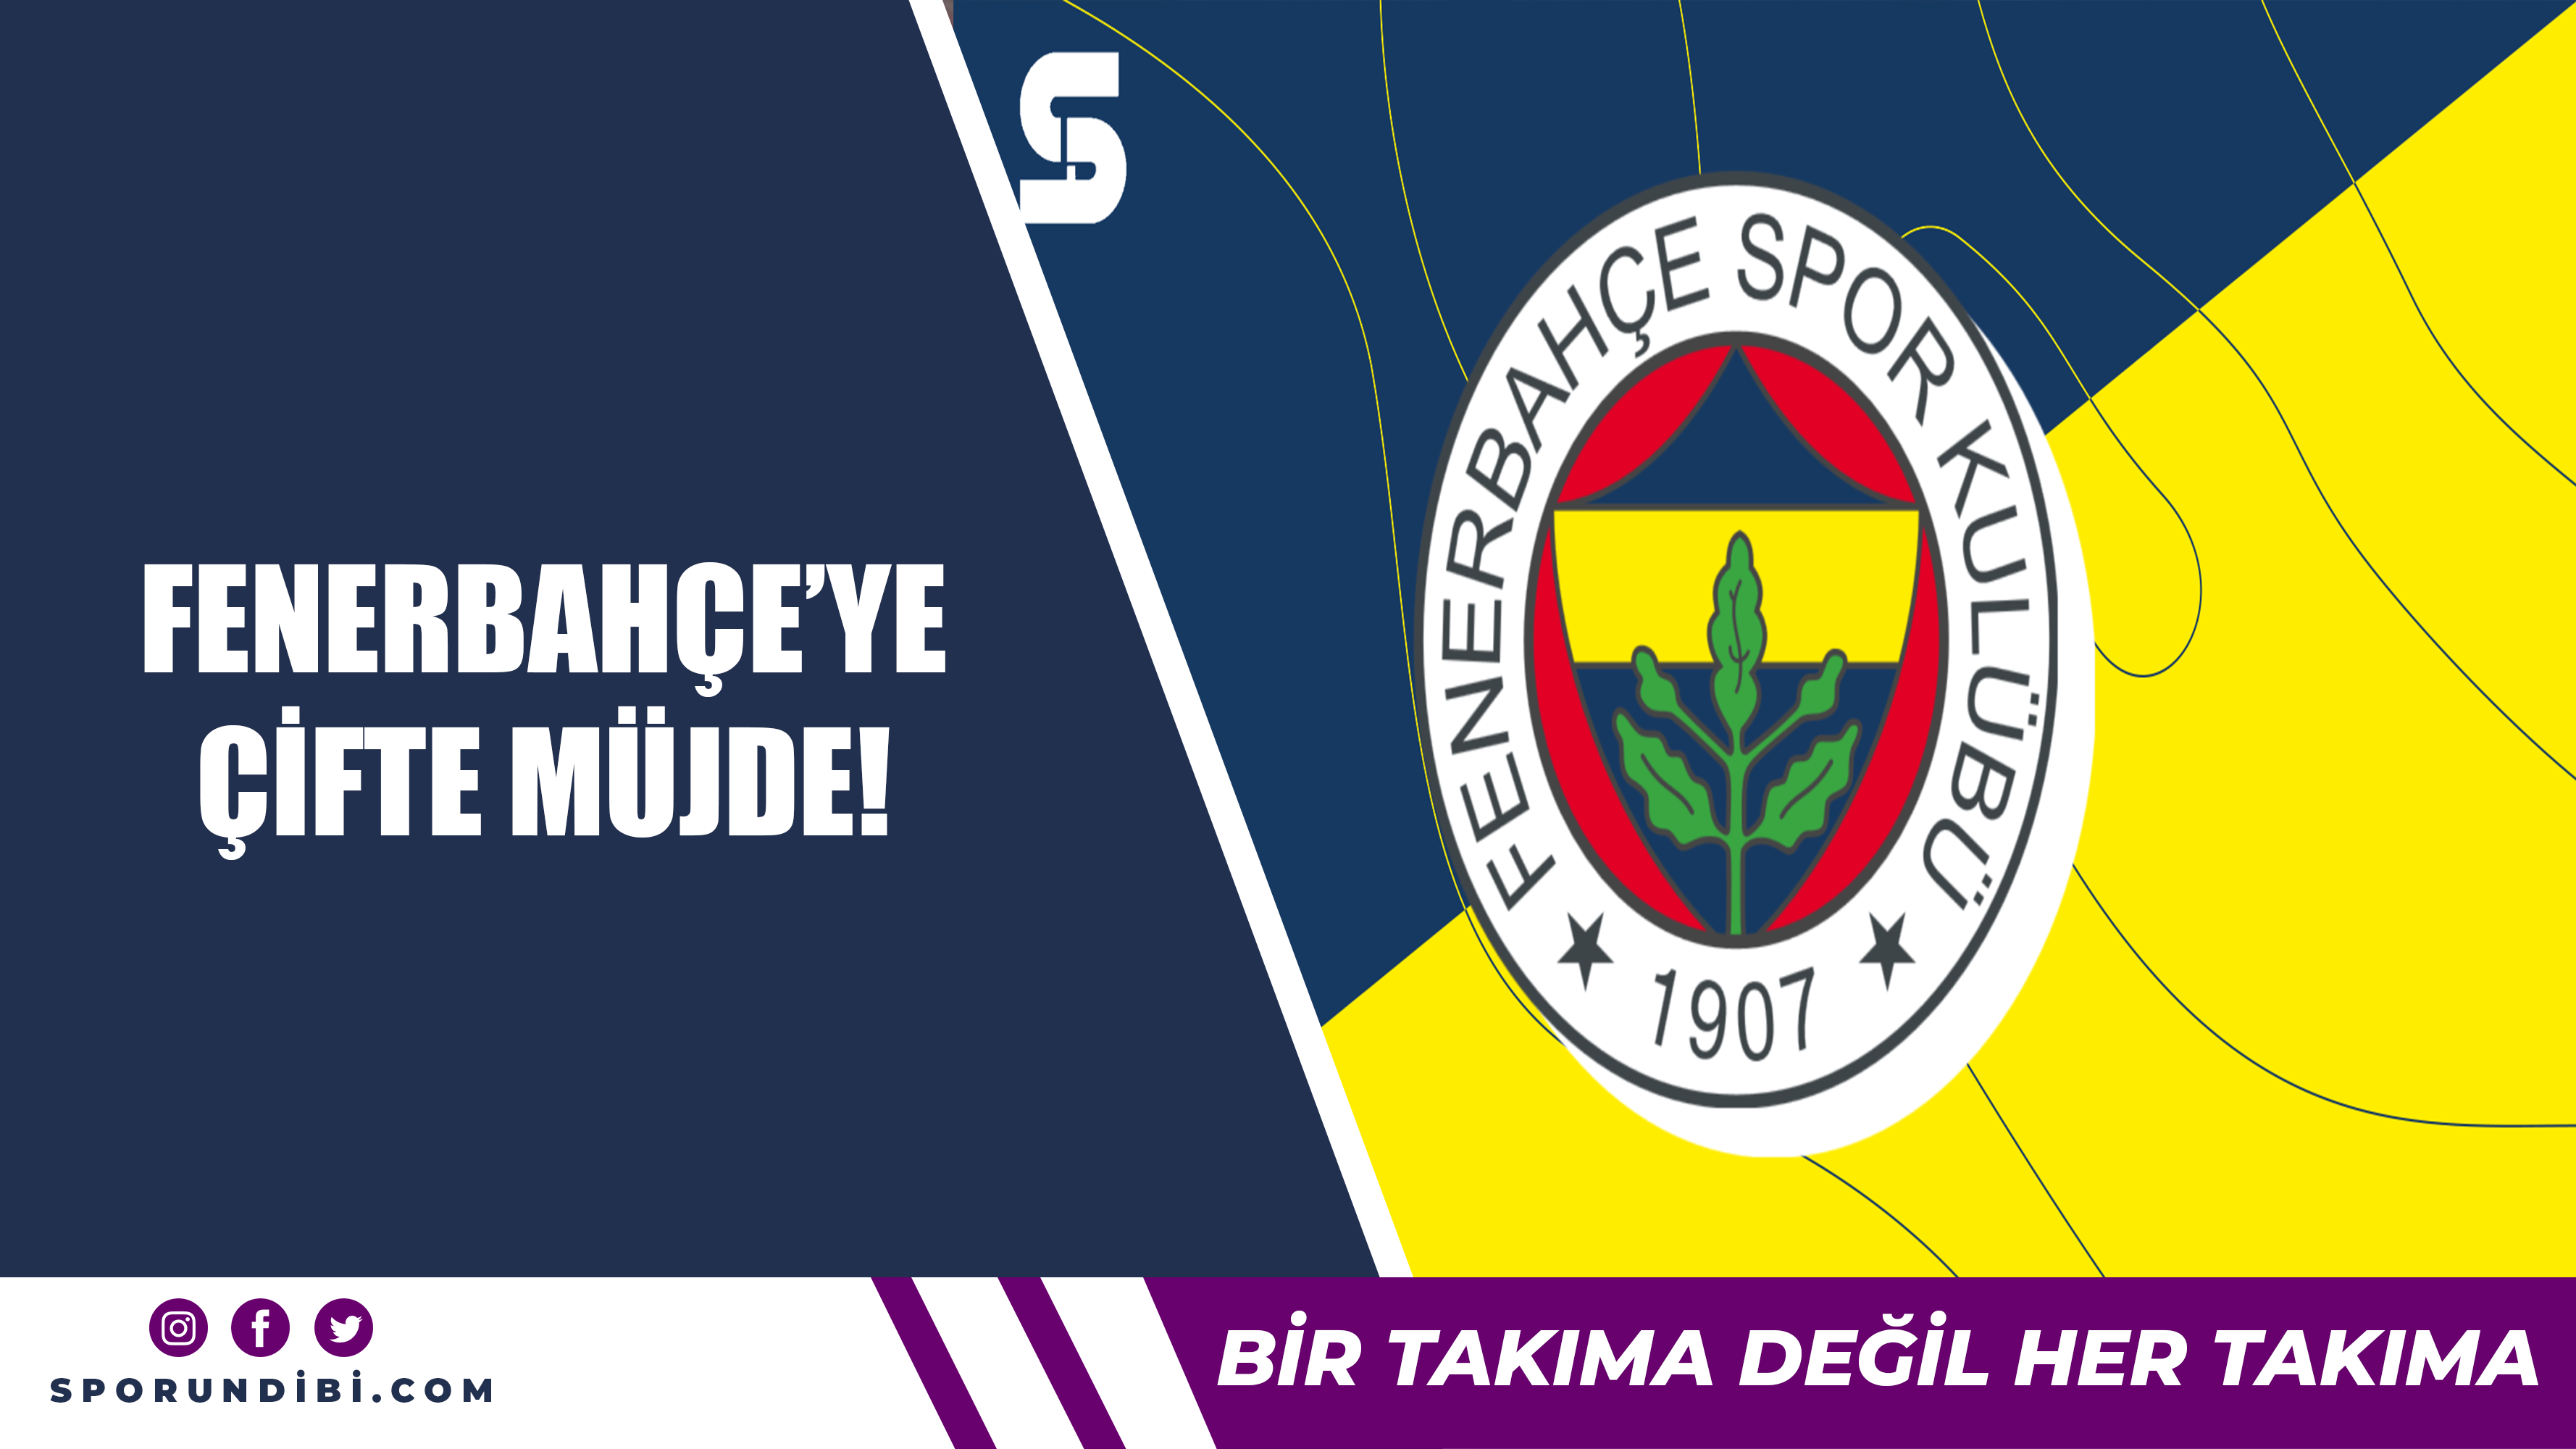 Fenerbahçe'ye çifte müjde!